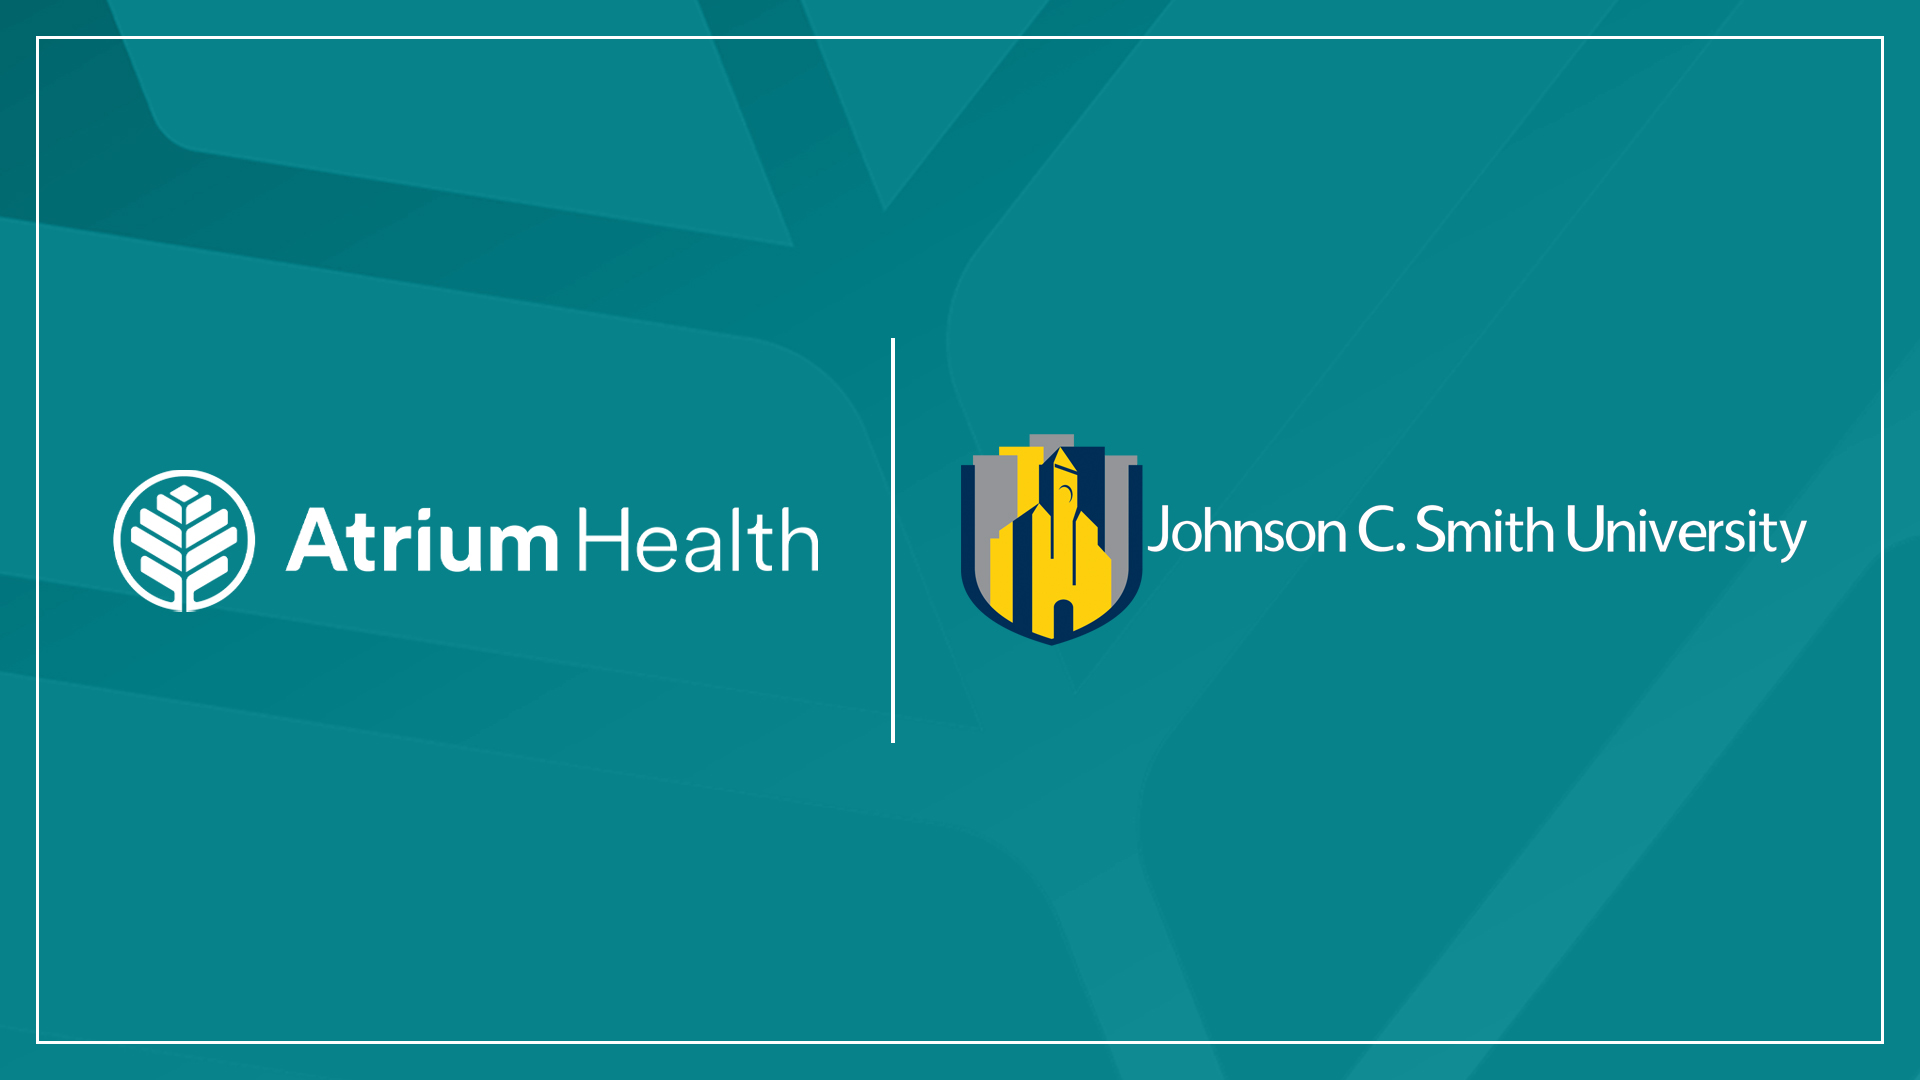 Atrium Health Johnson C Smith University Partner to Enhance Student Health Center